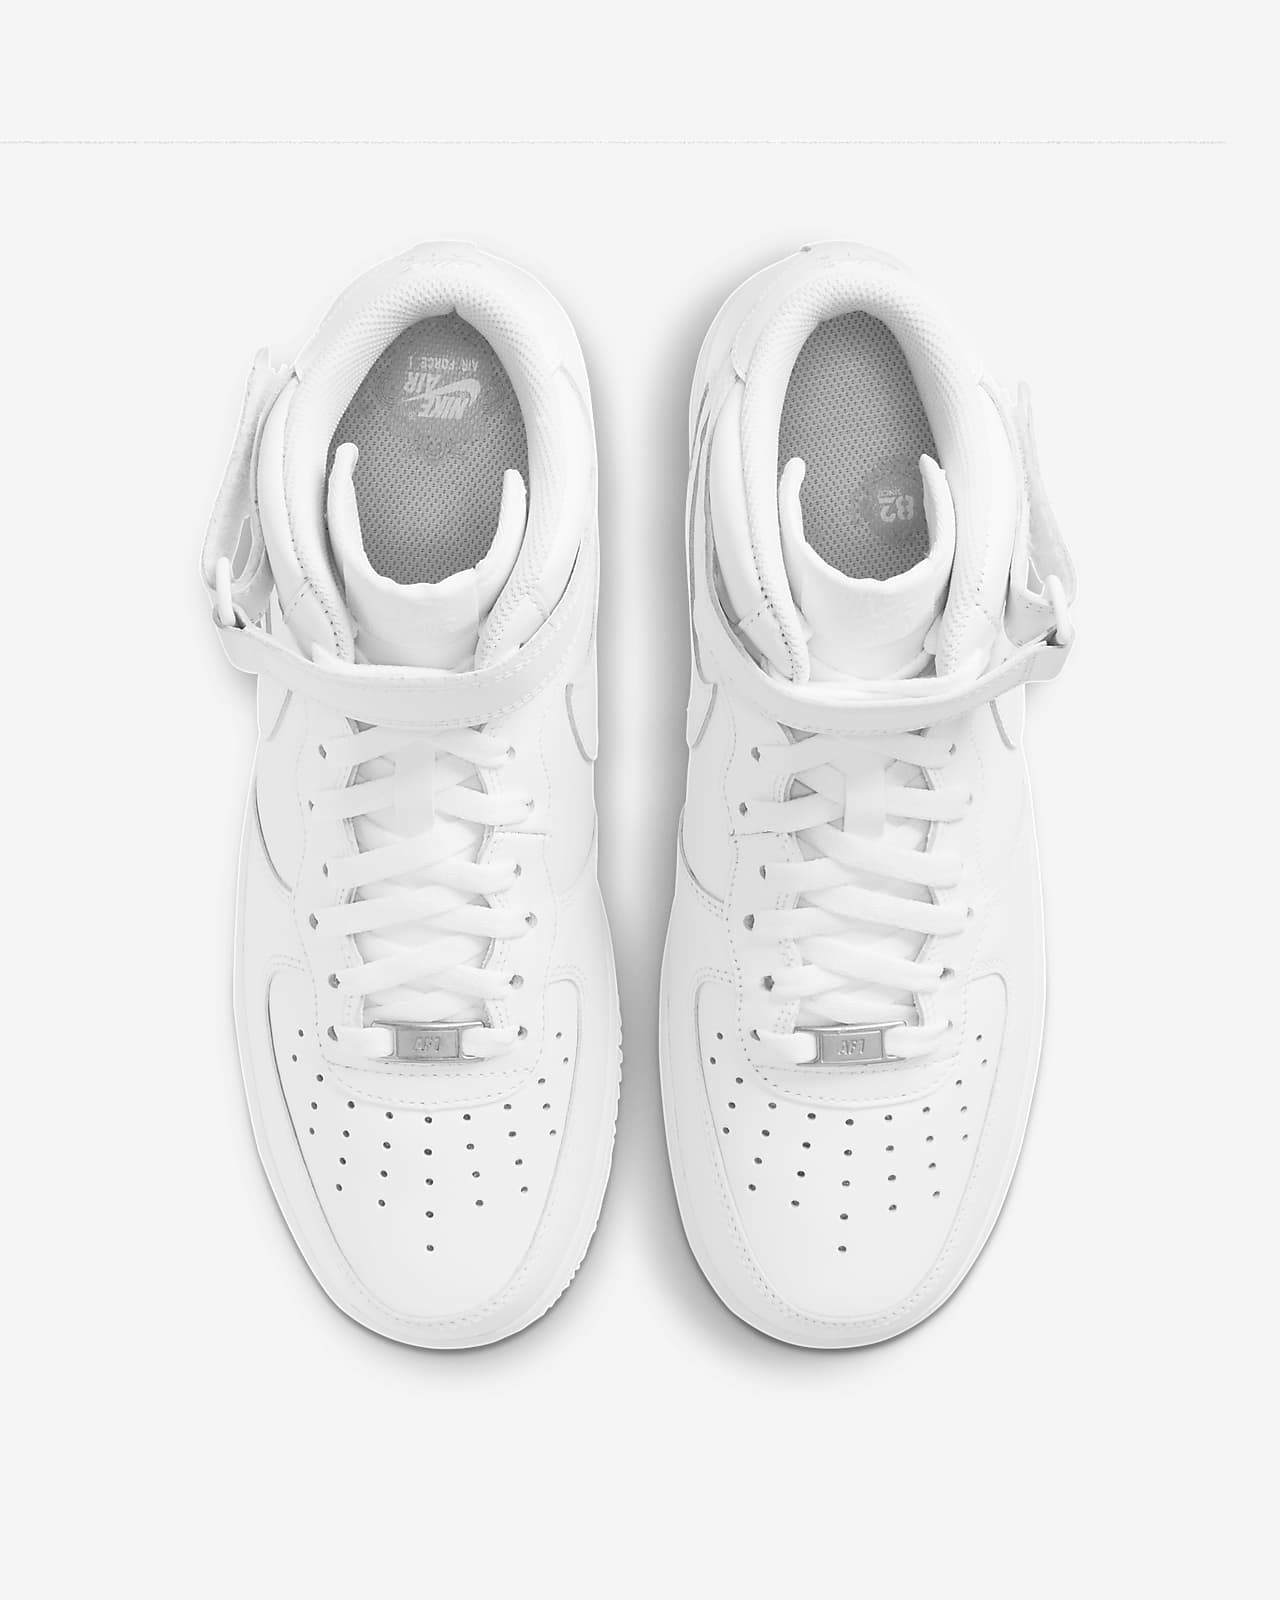 Nike Air Force 1 '82 Black/White Size 11.5